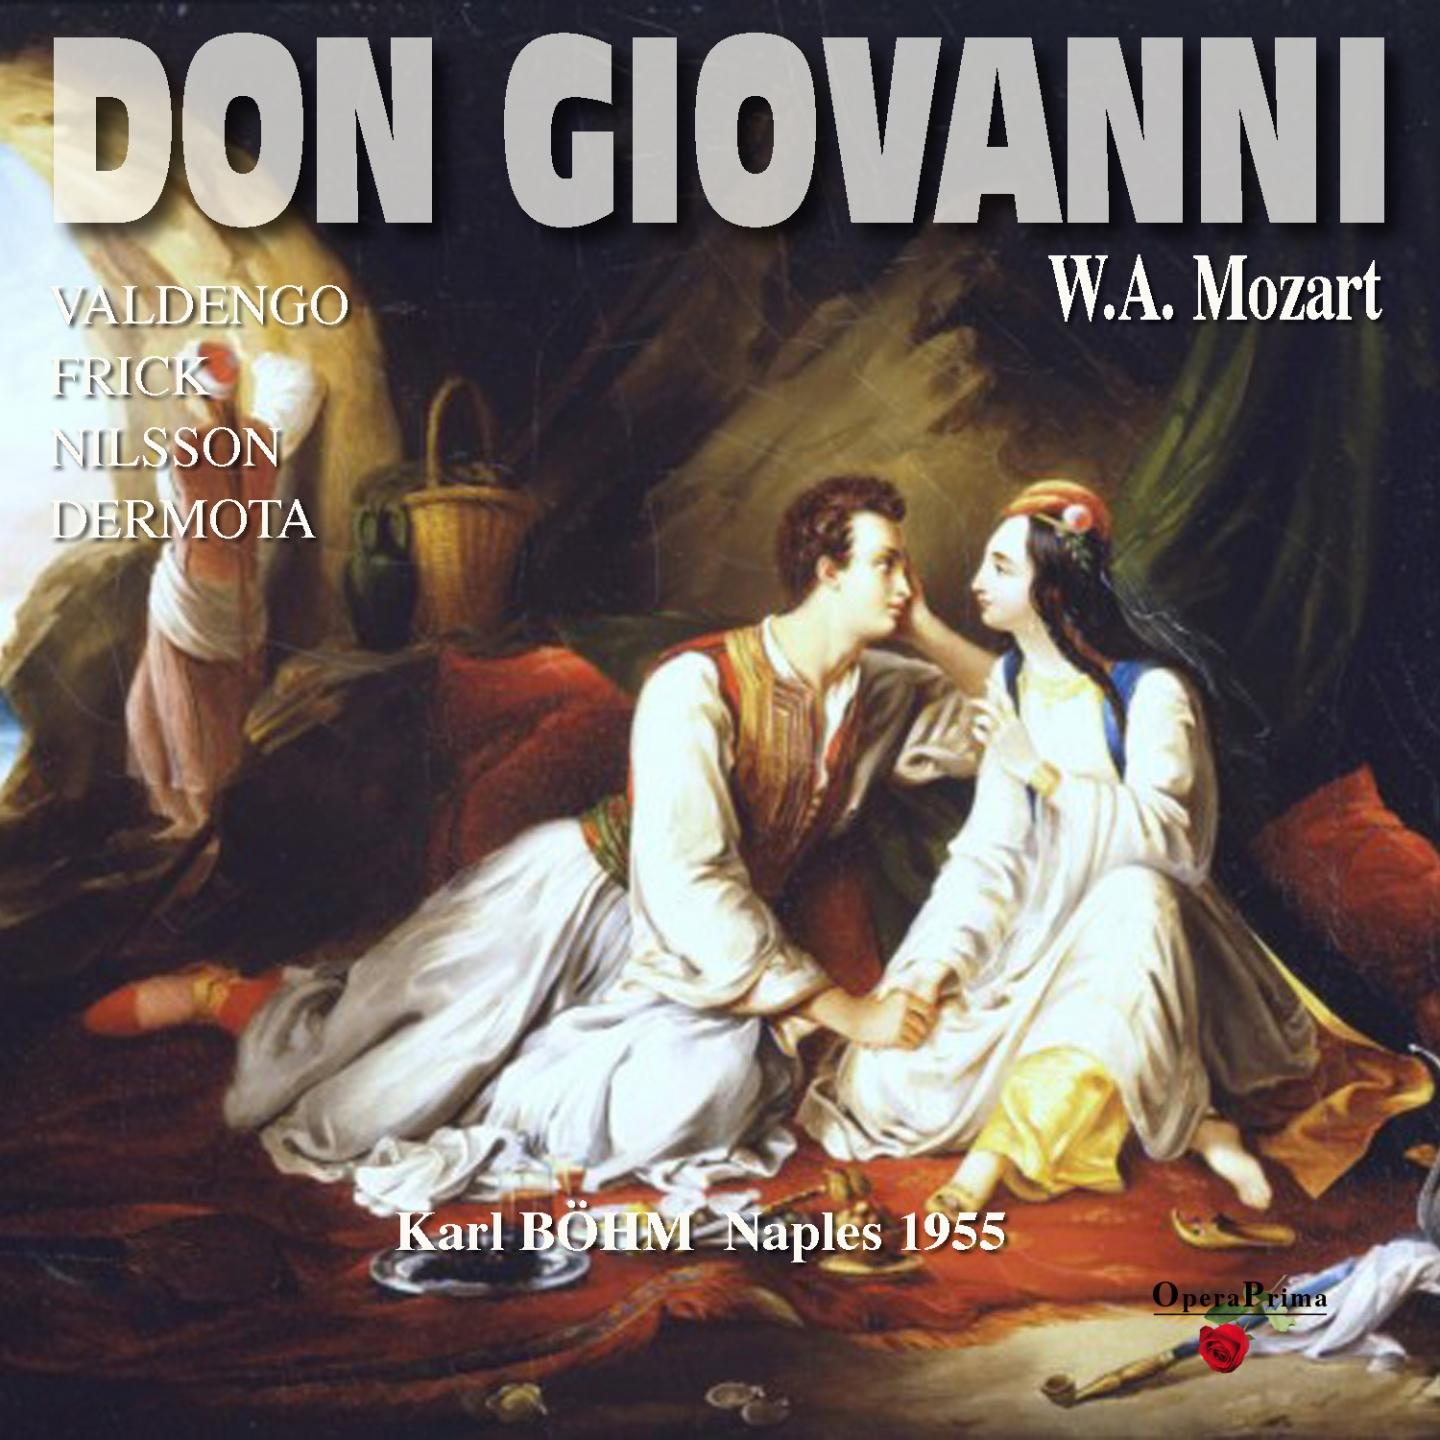 Don Giovanni: Act II - "Mille torbidi pensieri"